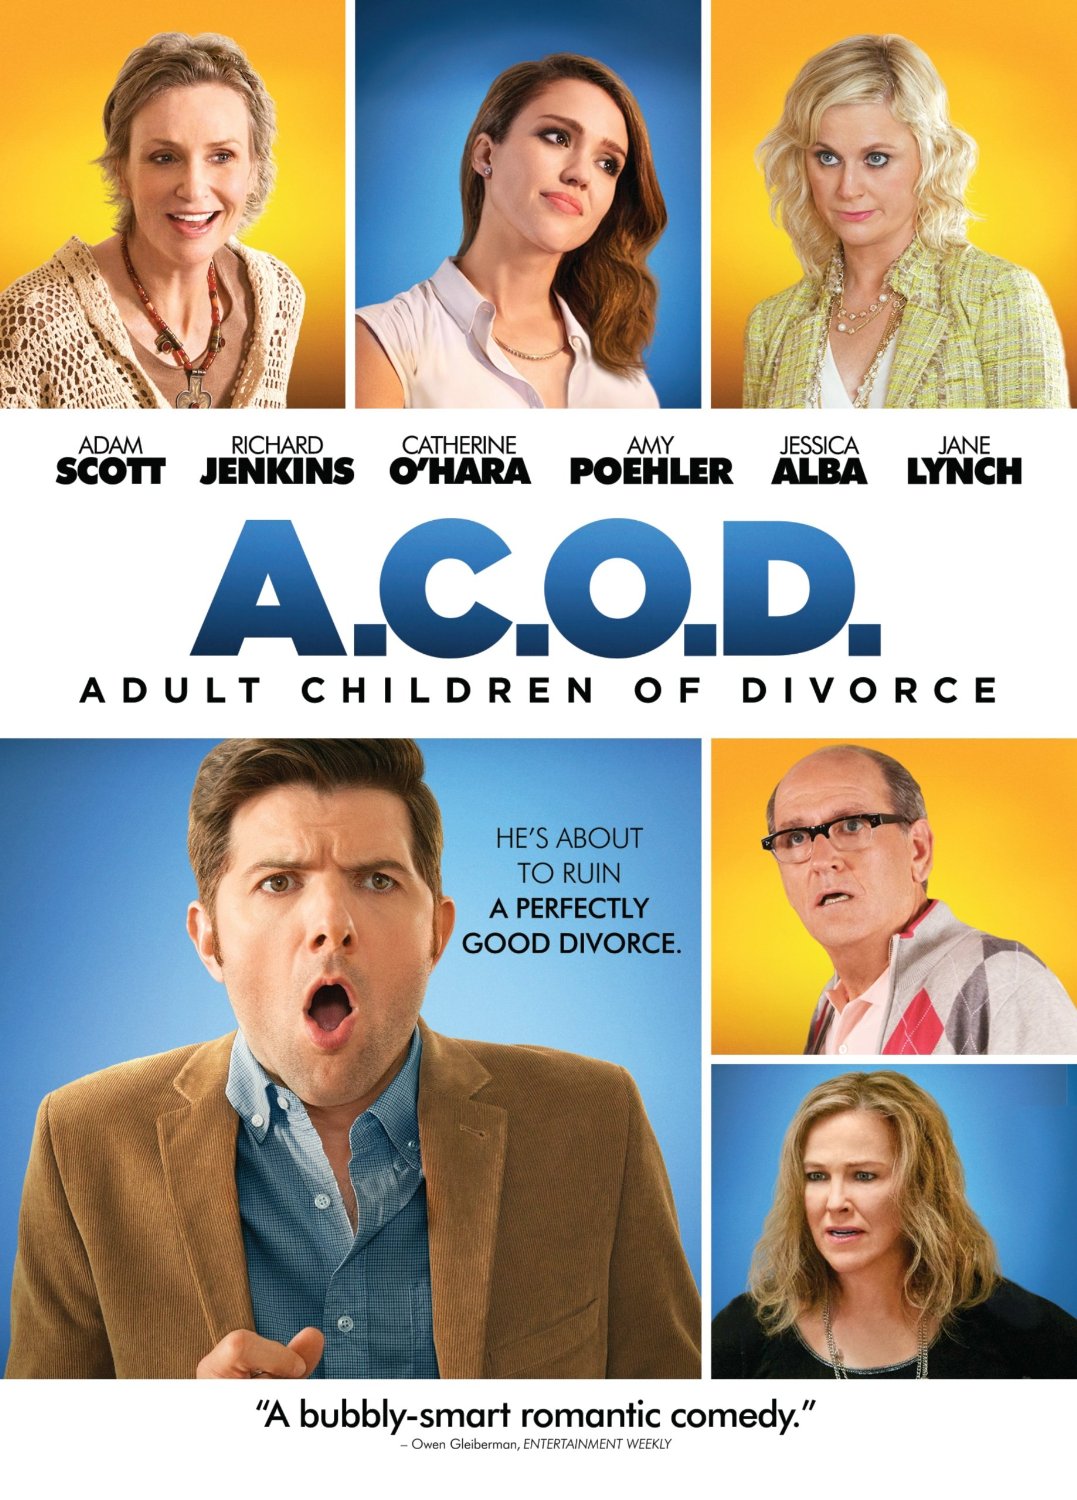 ACOD Adulti Complessati Originati Da Divorzio